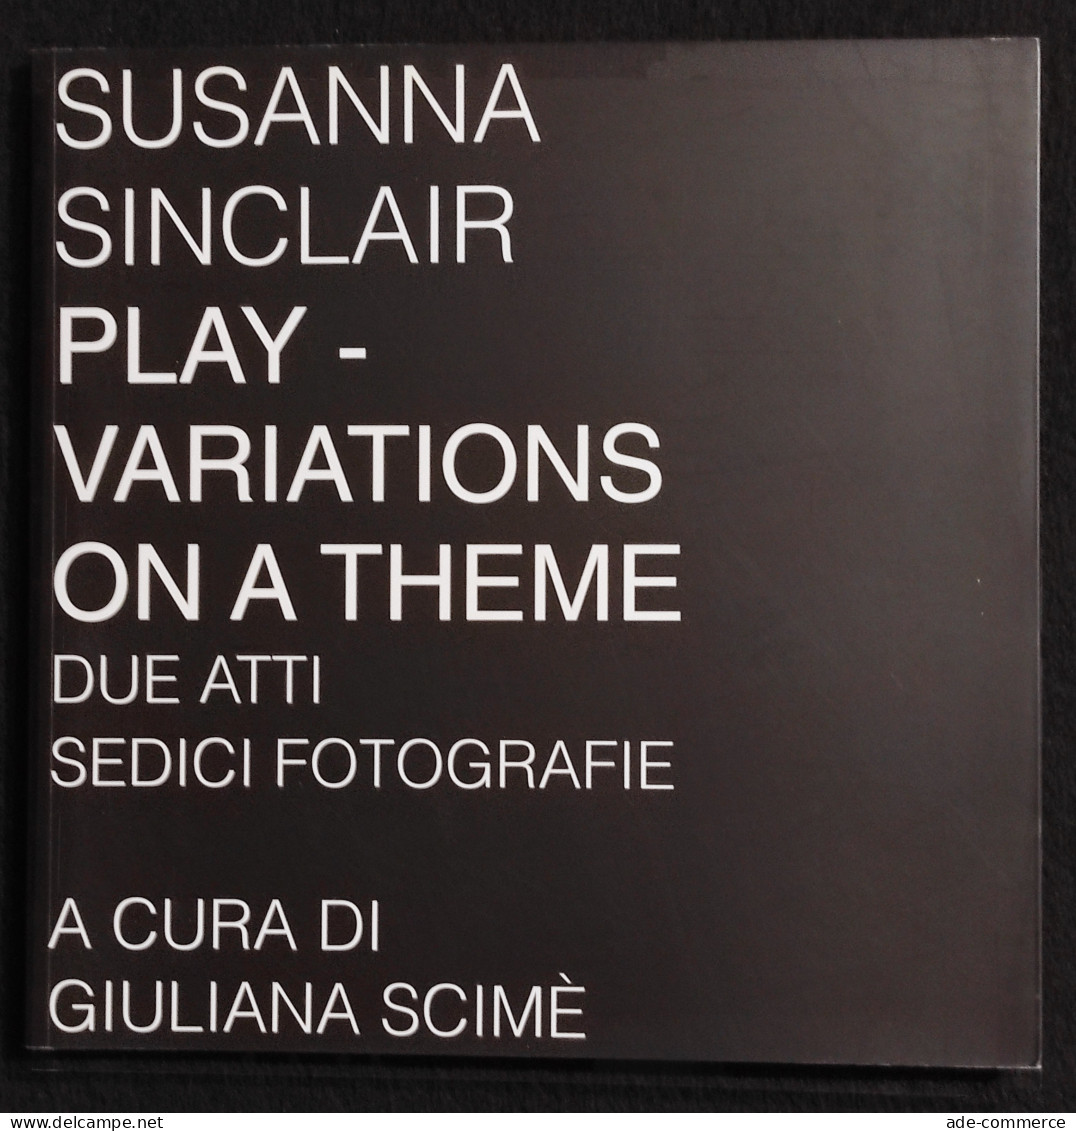 Susanna Sinclair - Play-Variations On A Theme - G- Scimè - Ed. Il Torchio - 2005 - Fotografia